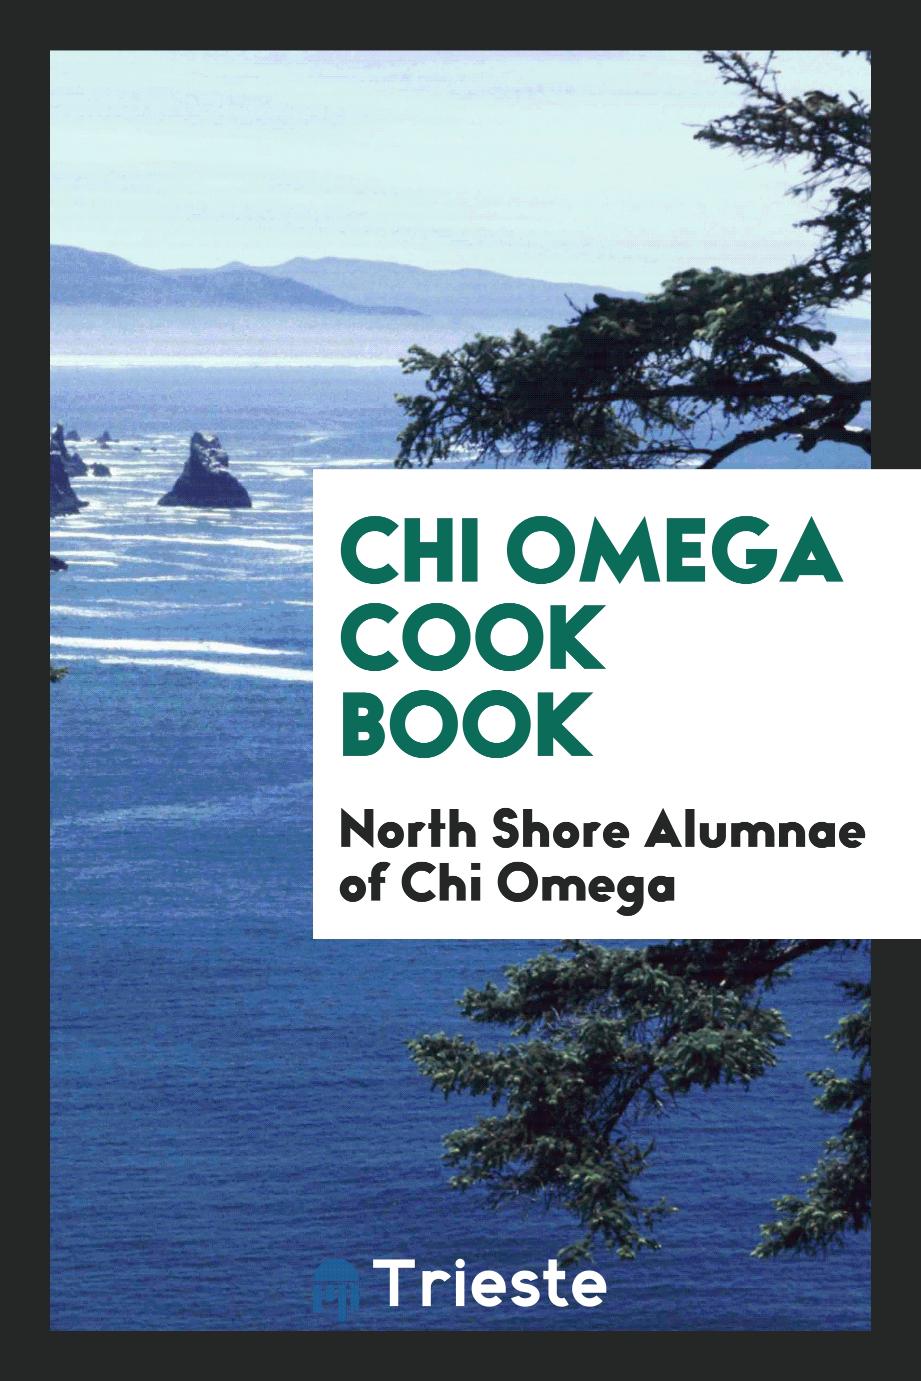 Chi Omega cook book